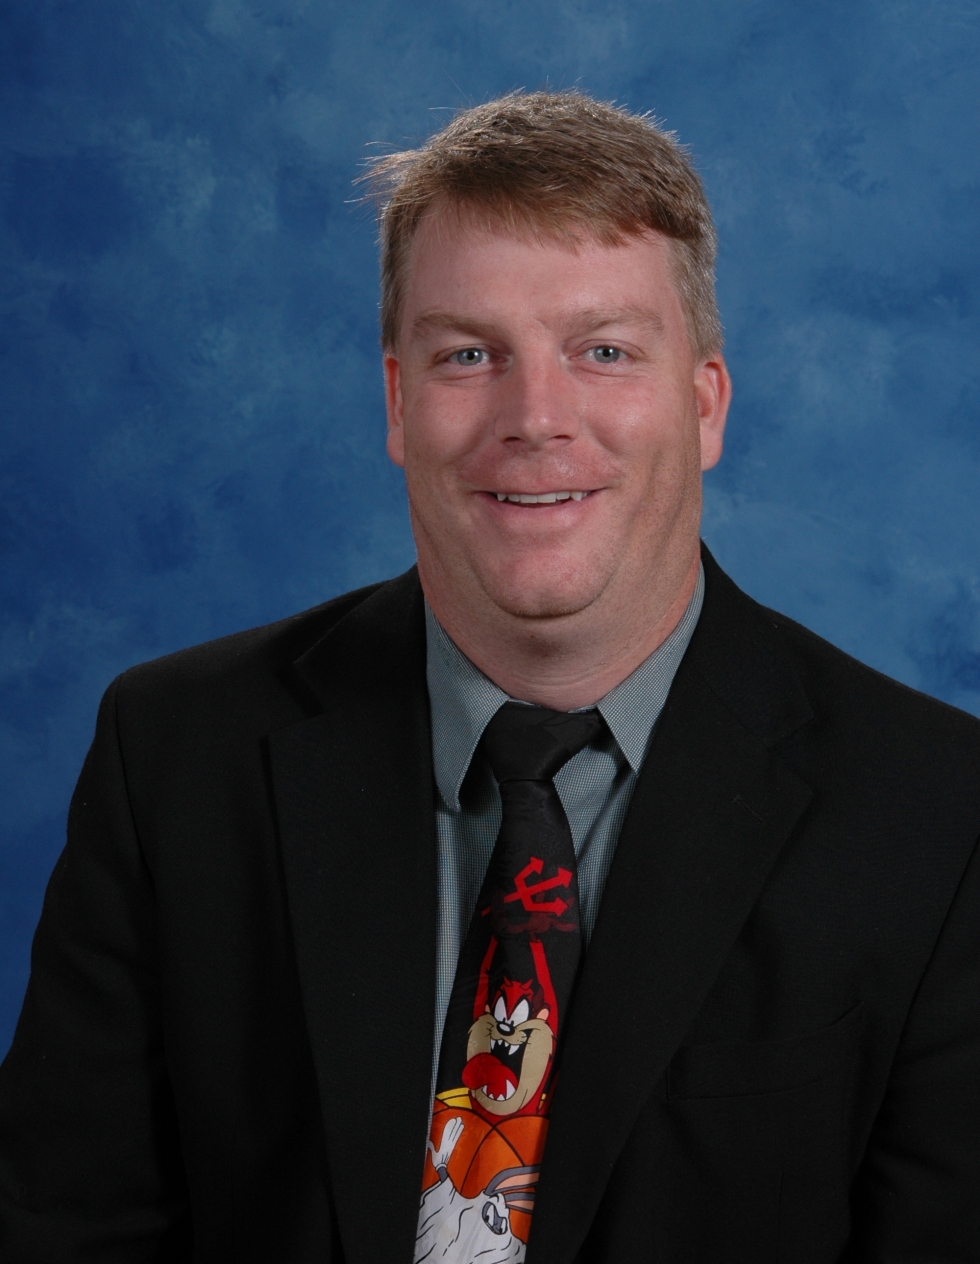 Mr. Scott Toon, principal